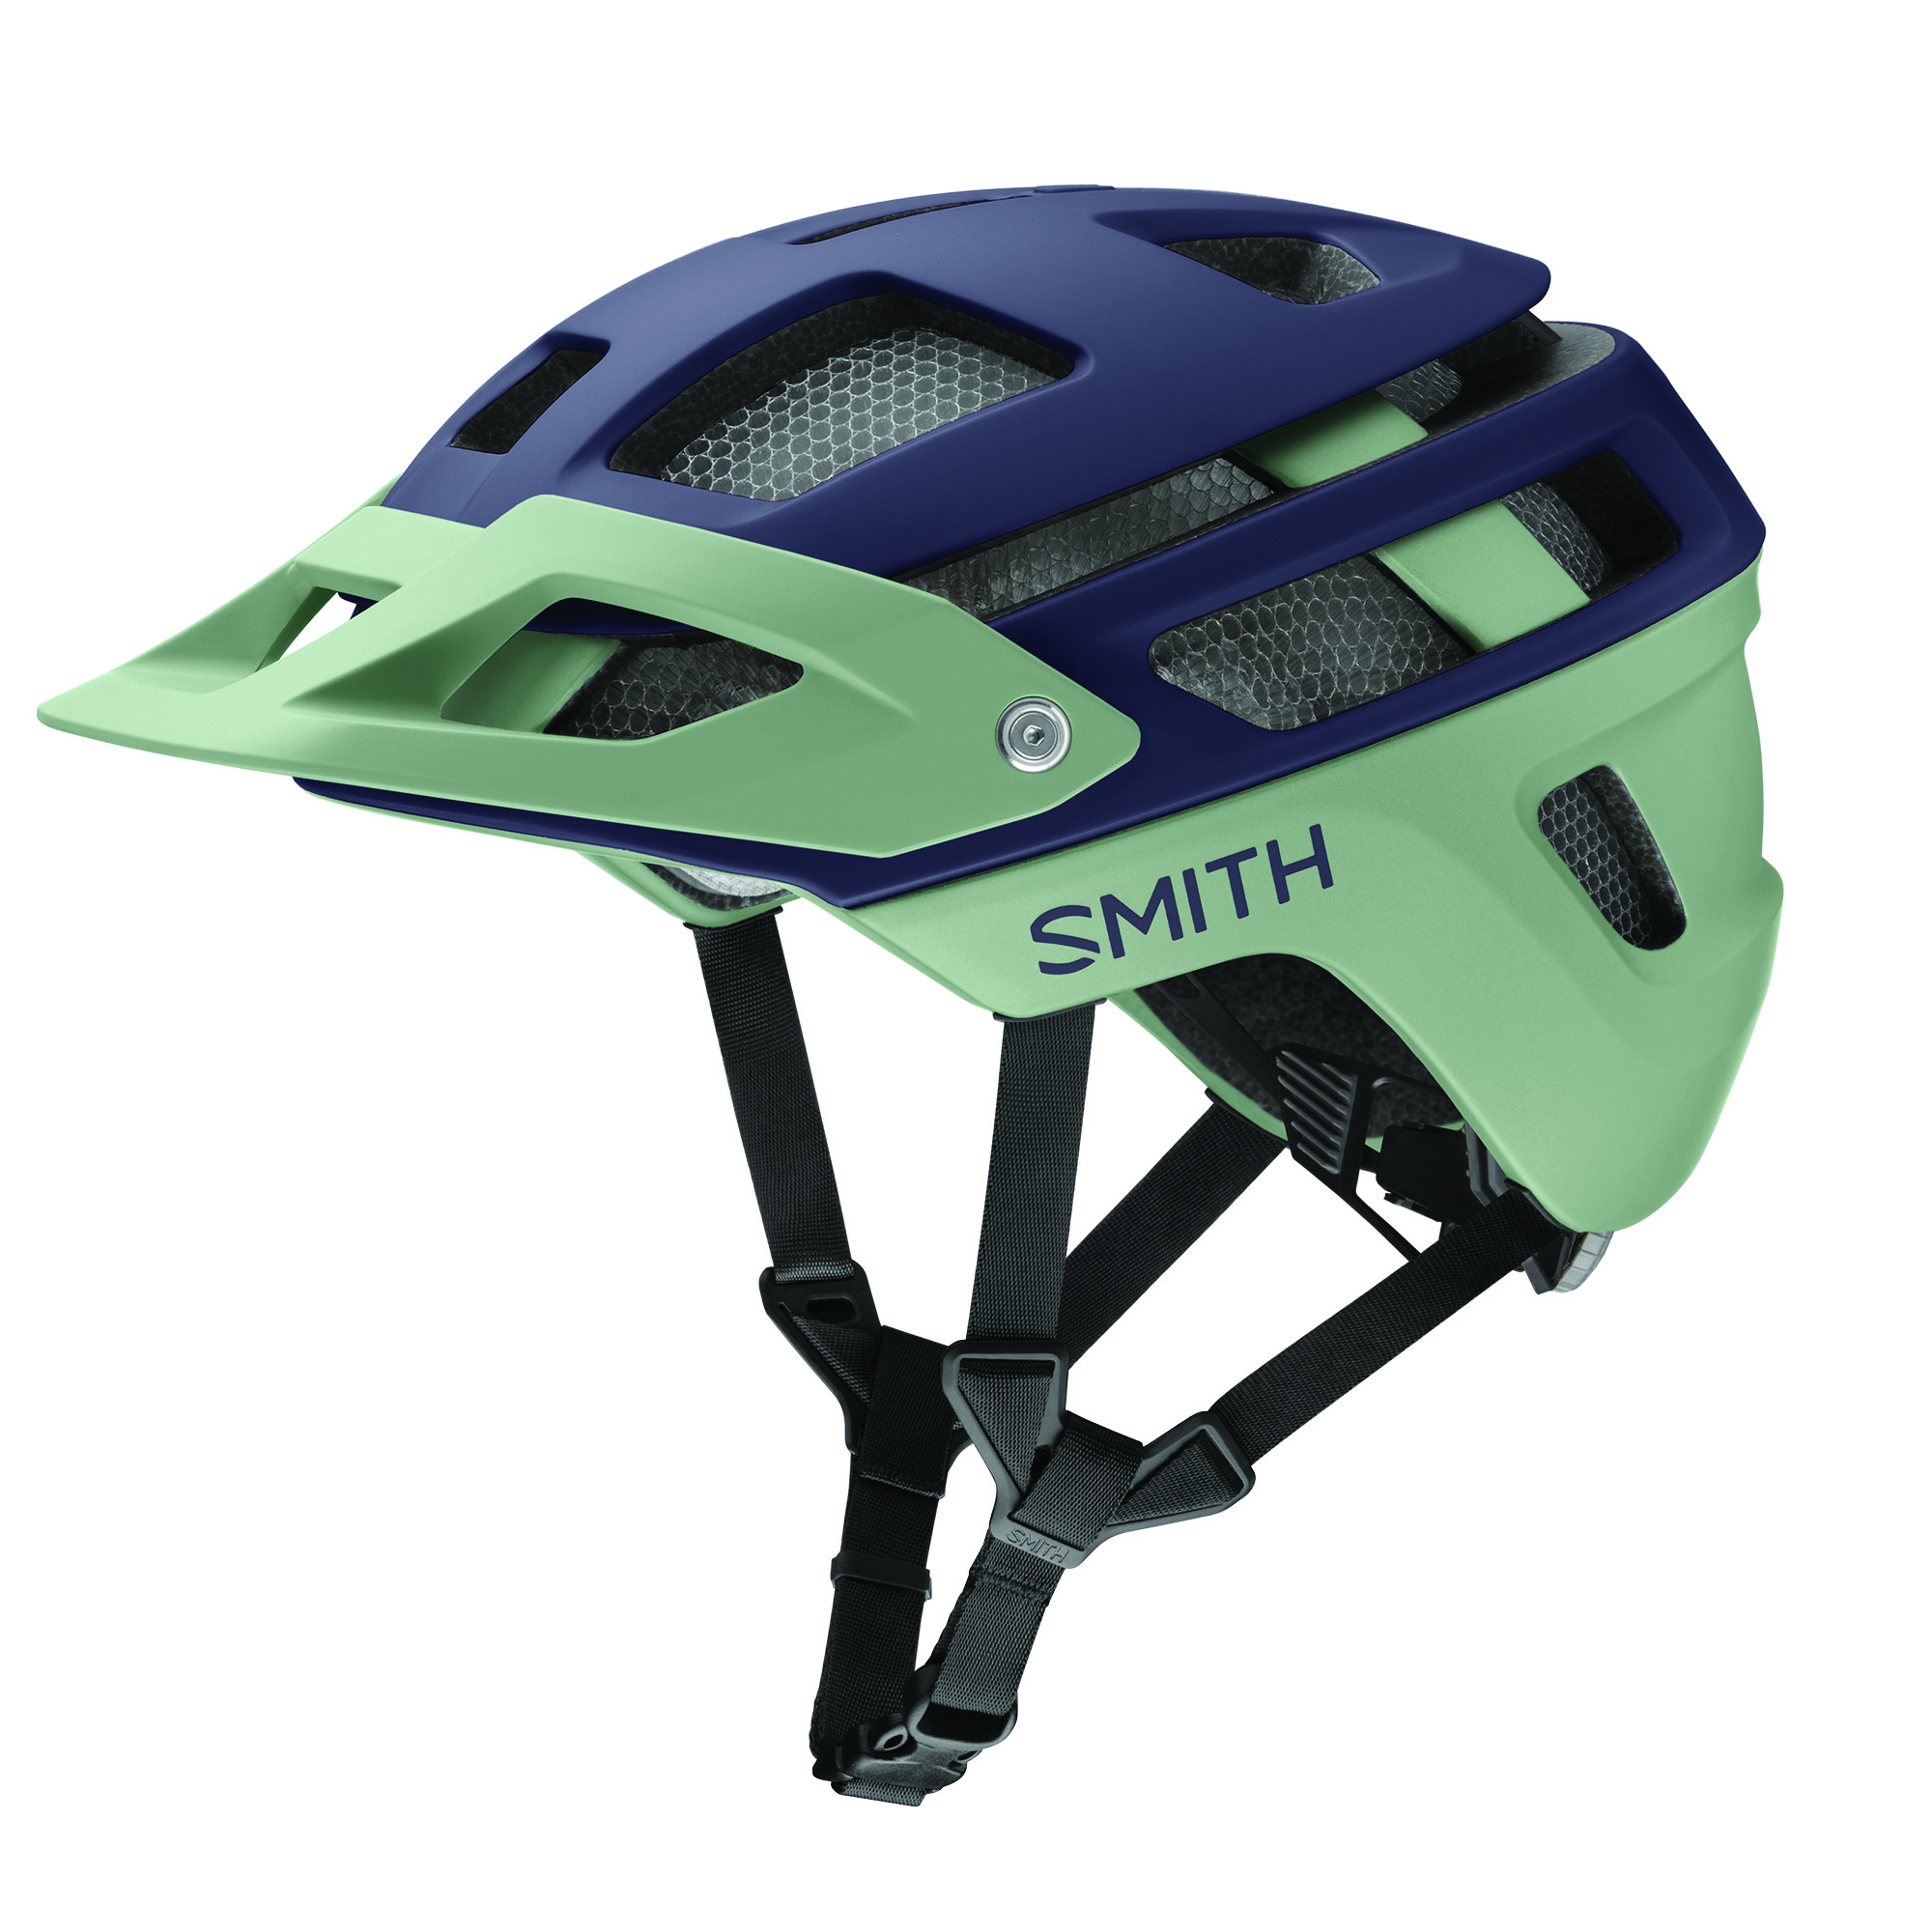 SMITH BIKE HELMET Forefront2 スミス バイク ヘルメット  フォーフロン...